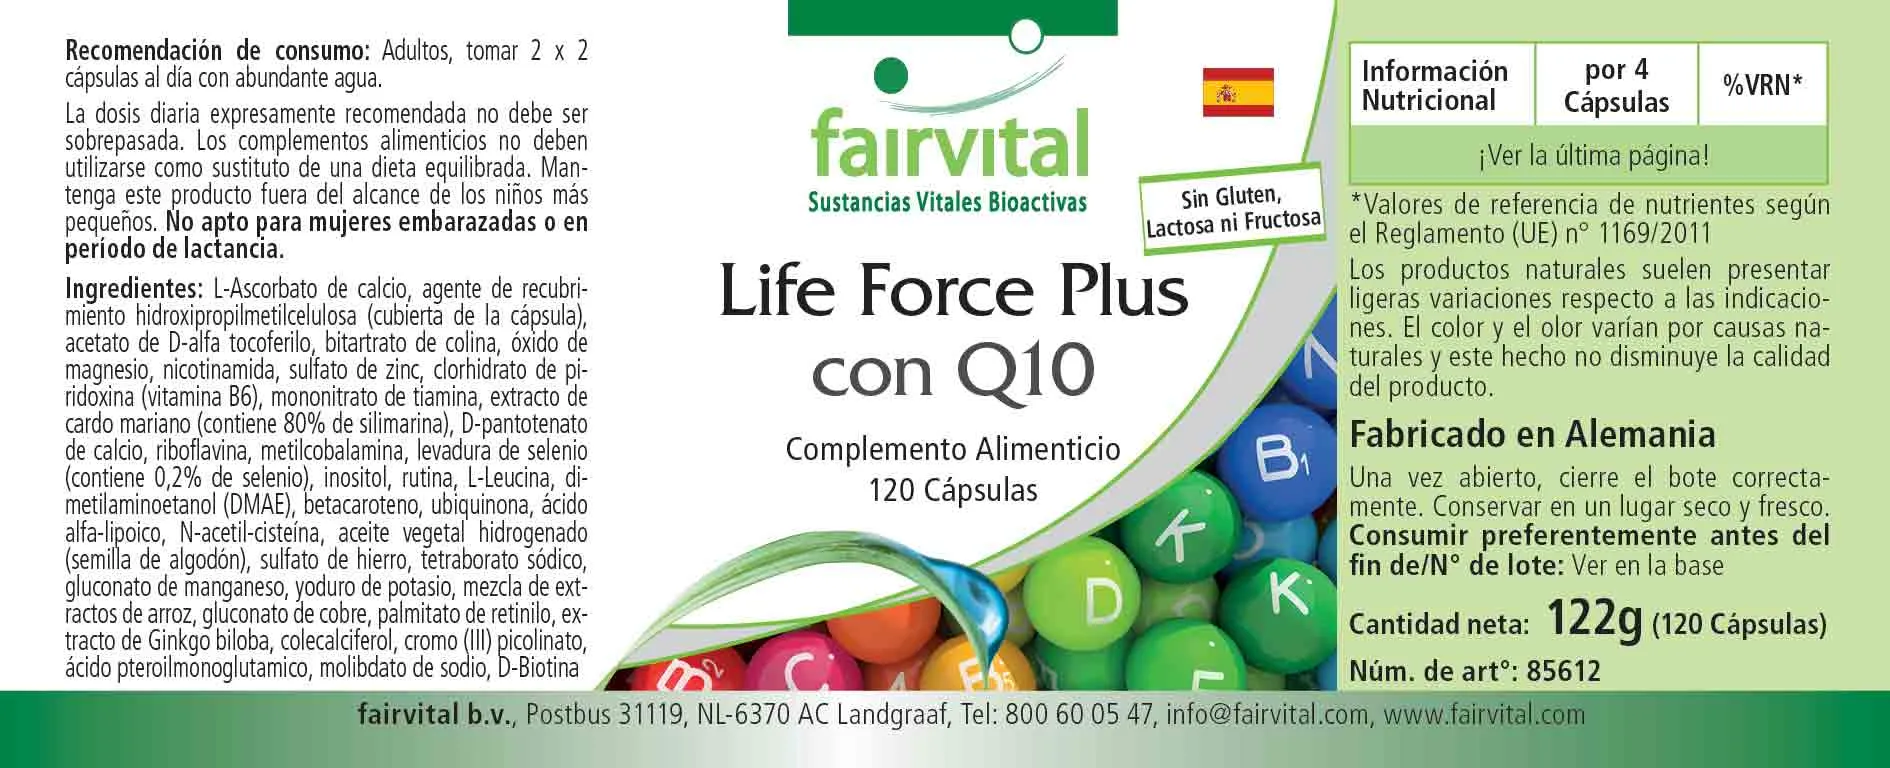 Life Force Plus con Q10 - 120 Cápsulas